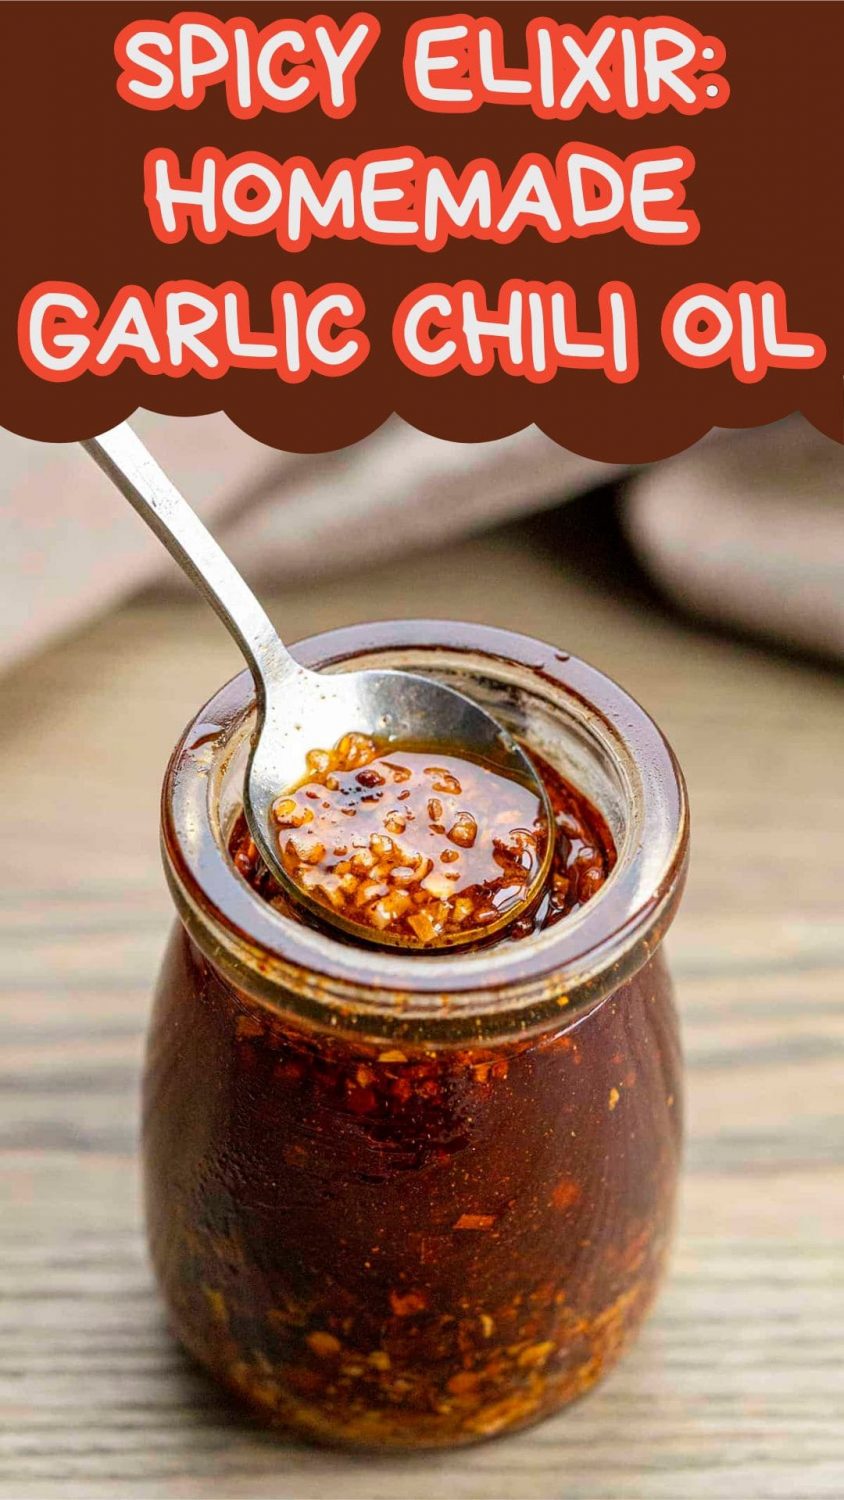 Spicy Elixir: Homemade Garlic Chili Oil